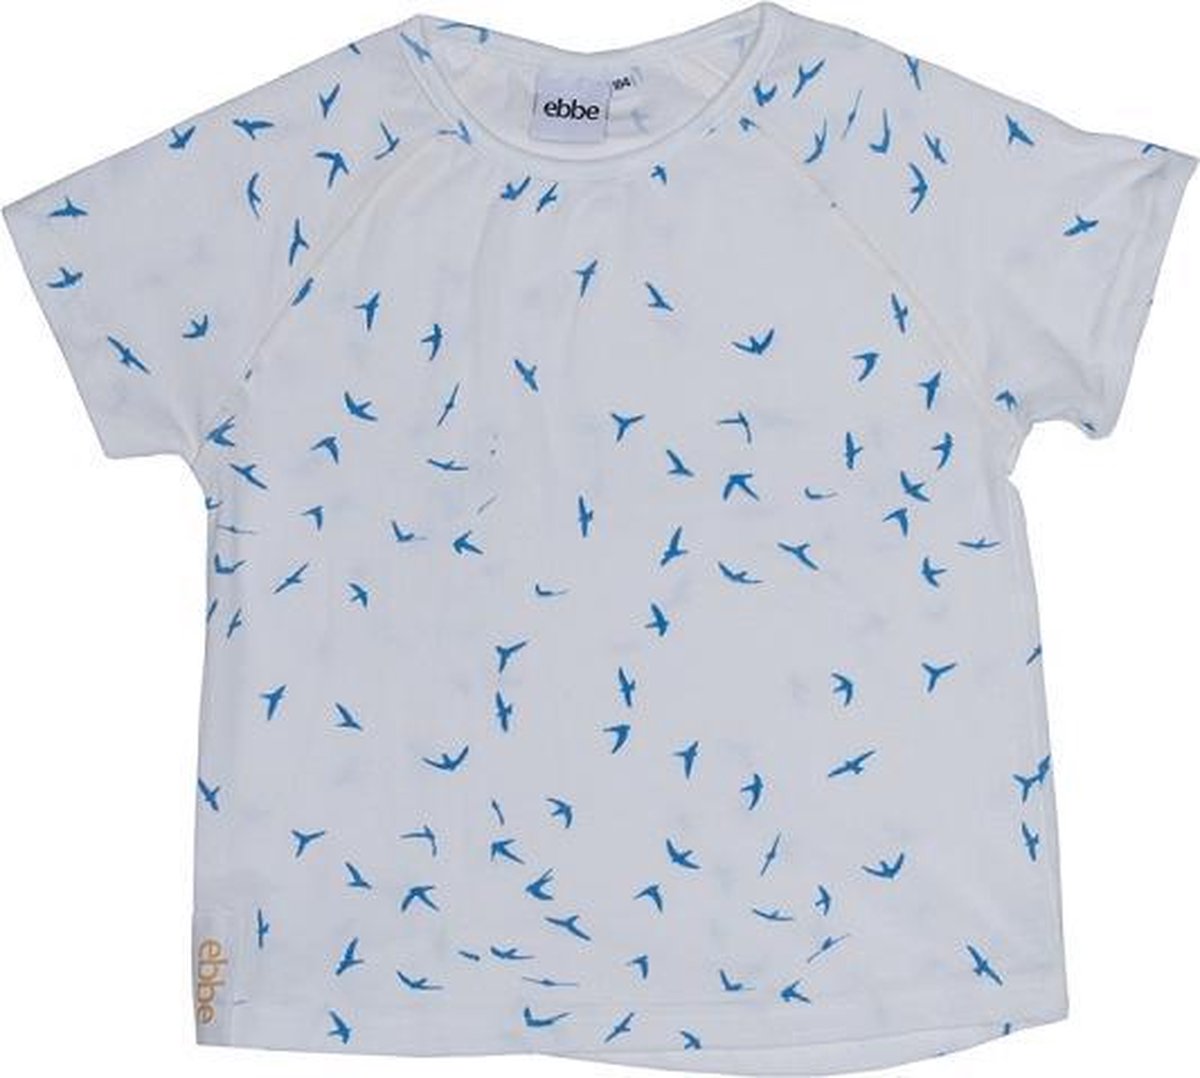 Ebbe - T-shirt - Uno swallow tee - wit - Maat 122